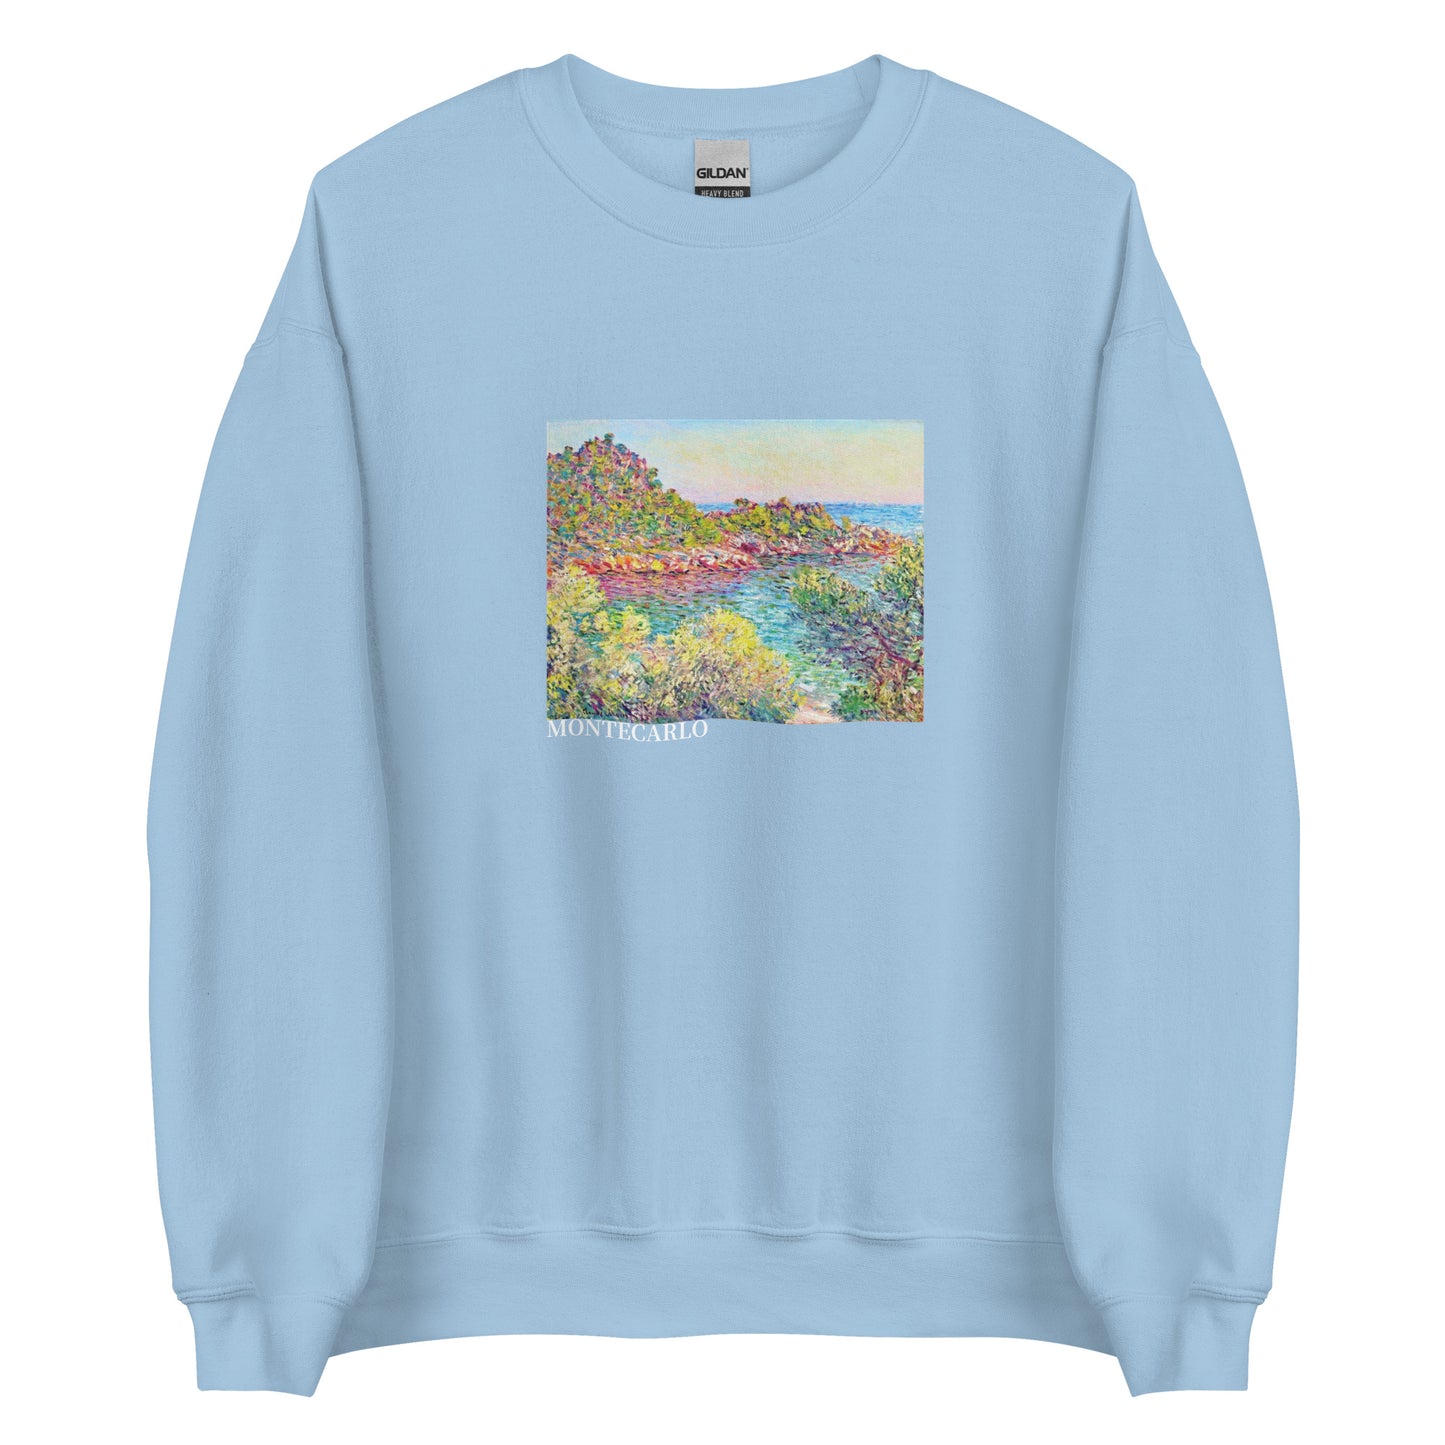 Monet Montecarlo - Unisex Art Sweatshirt